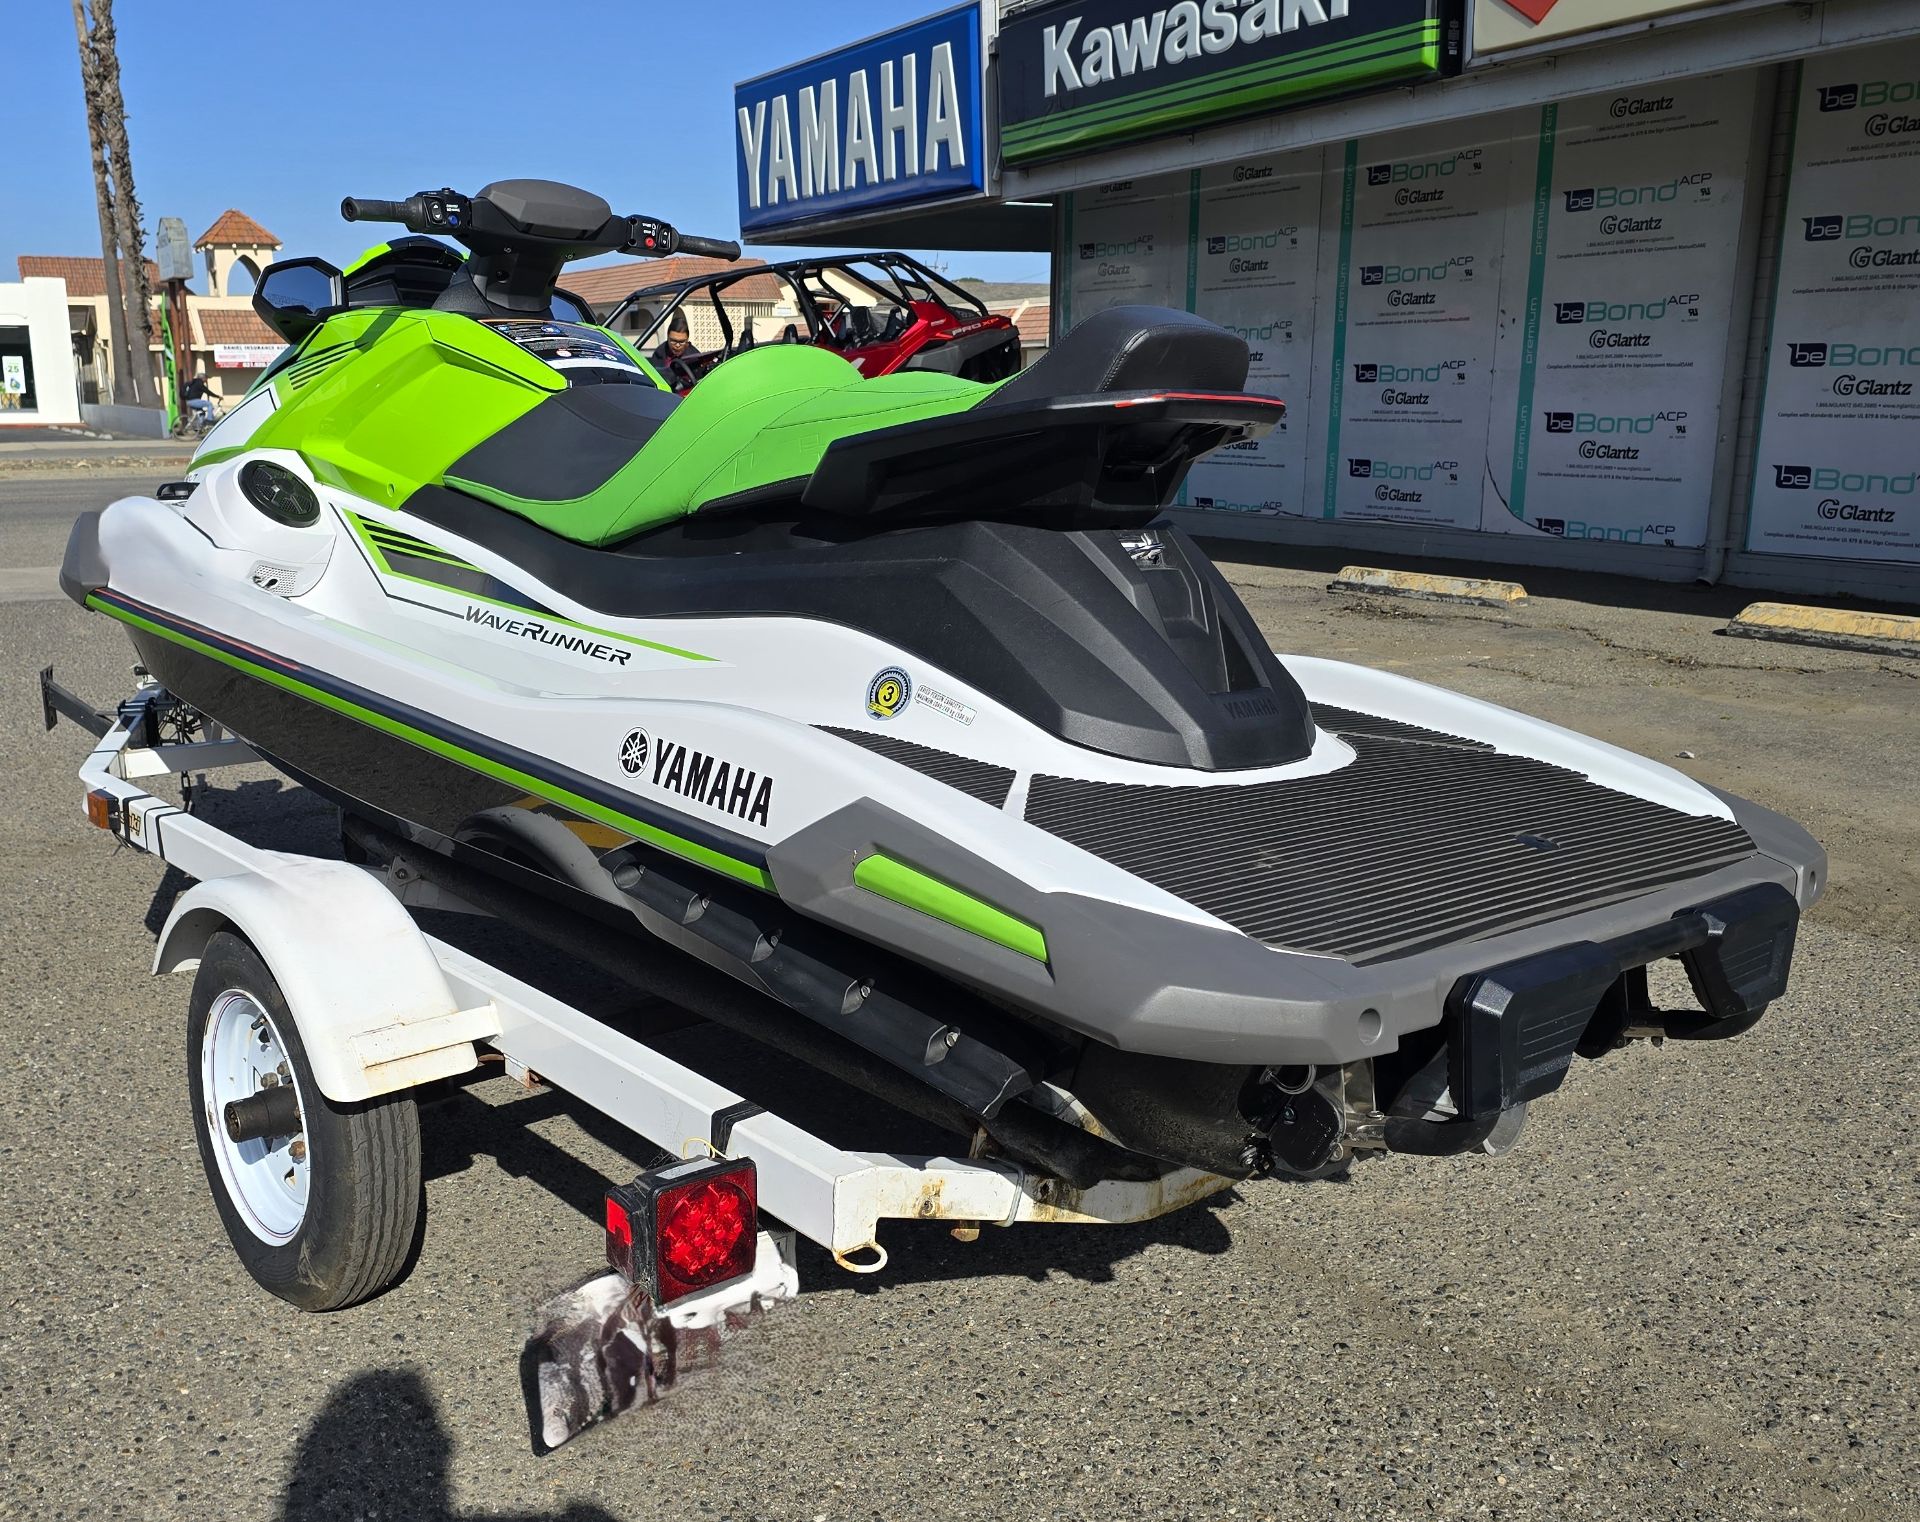 2021 Yamaha VX Cruiser with Audio in Salinas, California - Photo 8